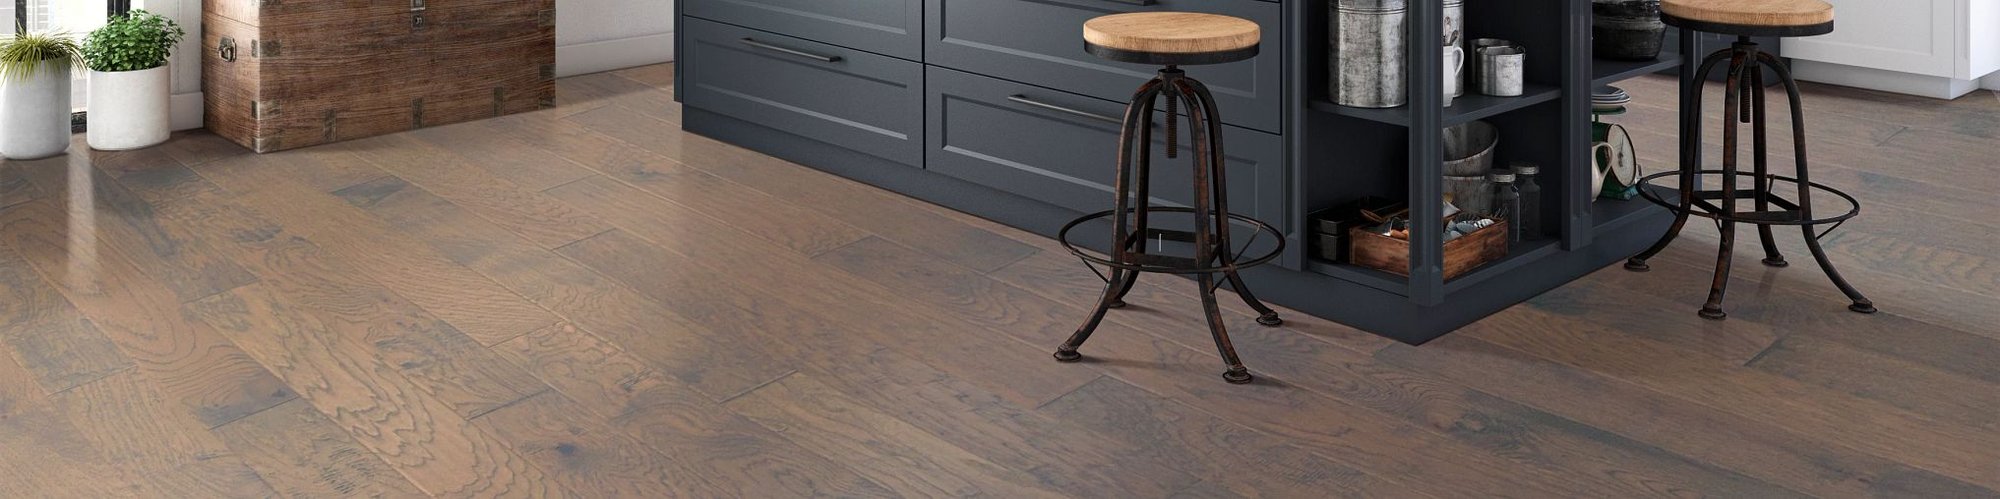 Hardwood flooring in kitchen - Towne Interiors in IL